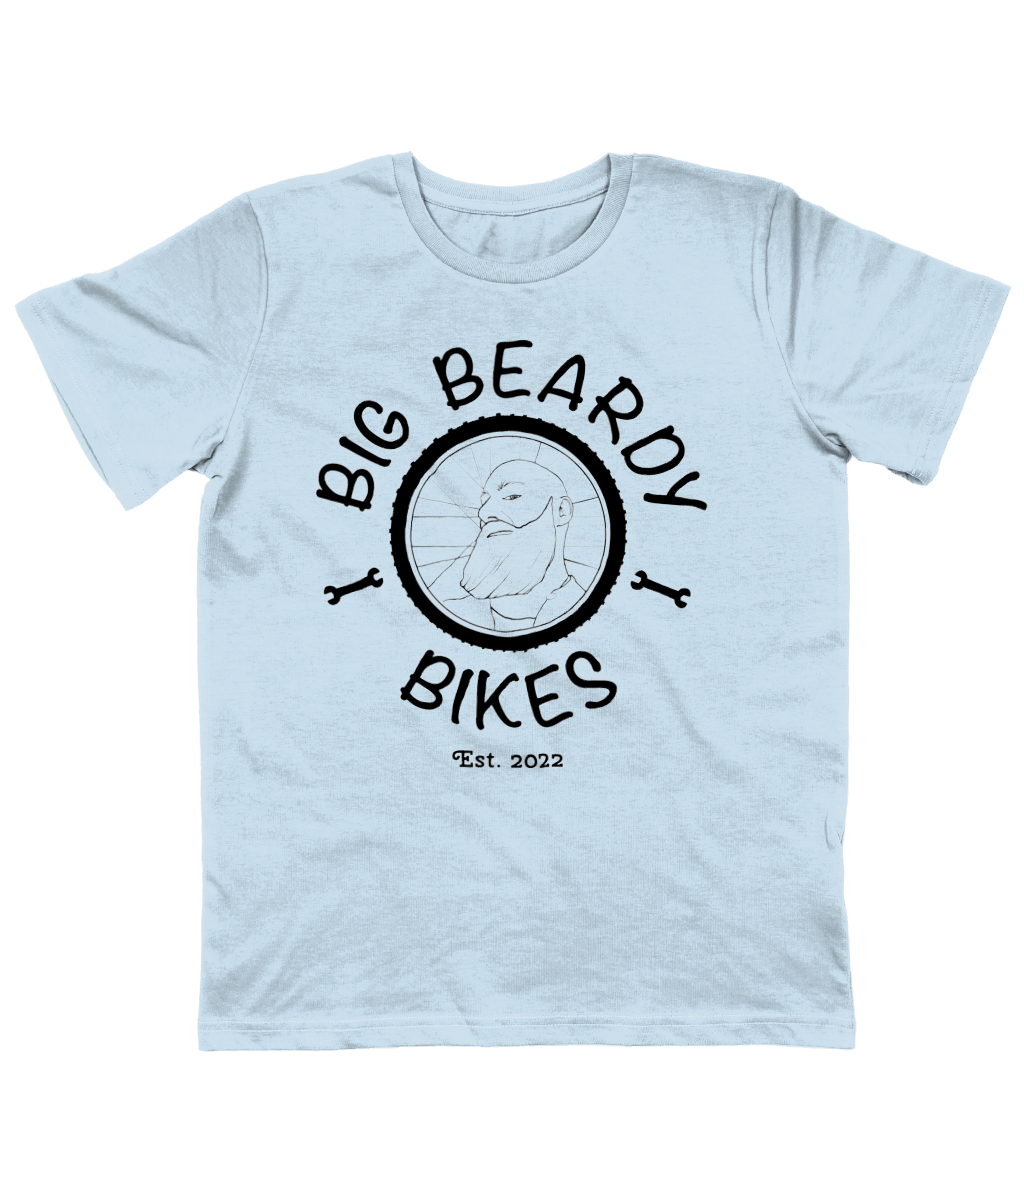 Big beardy bikes bicycle mechanic Junior Classic Jersey T-Shirt light blue - Black Logo